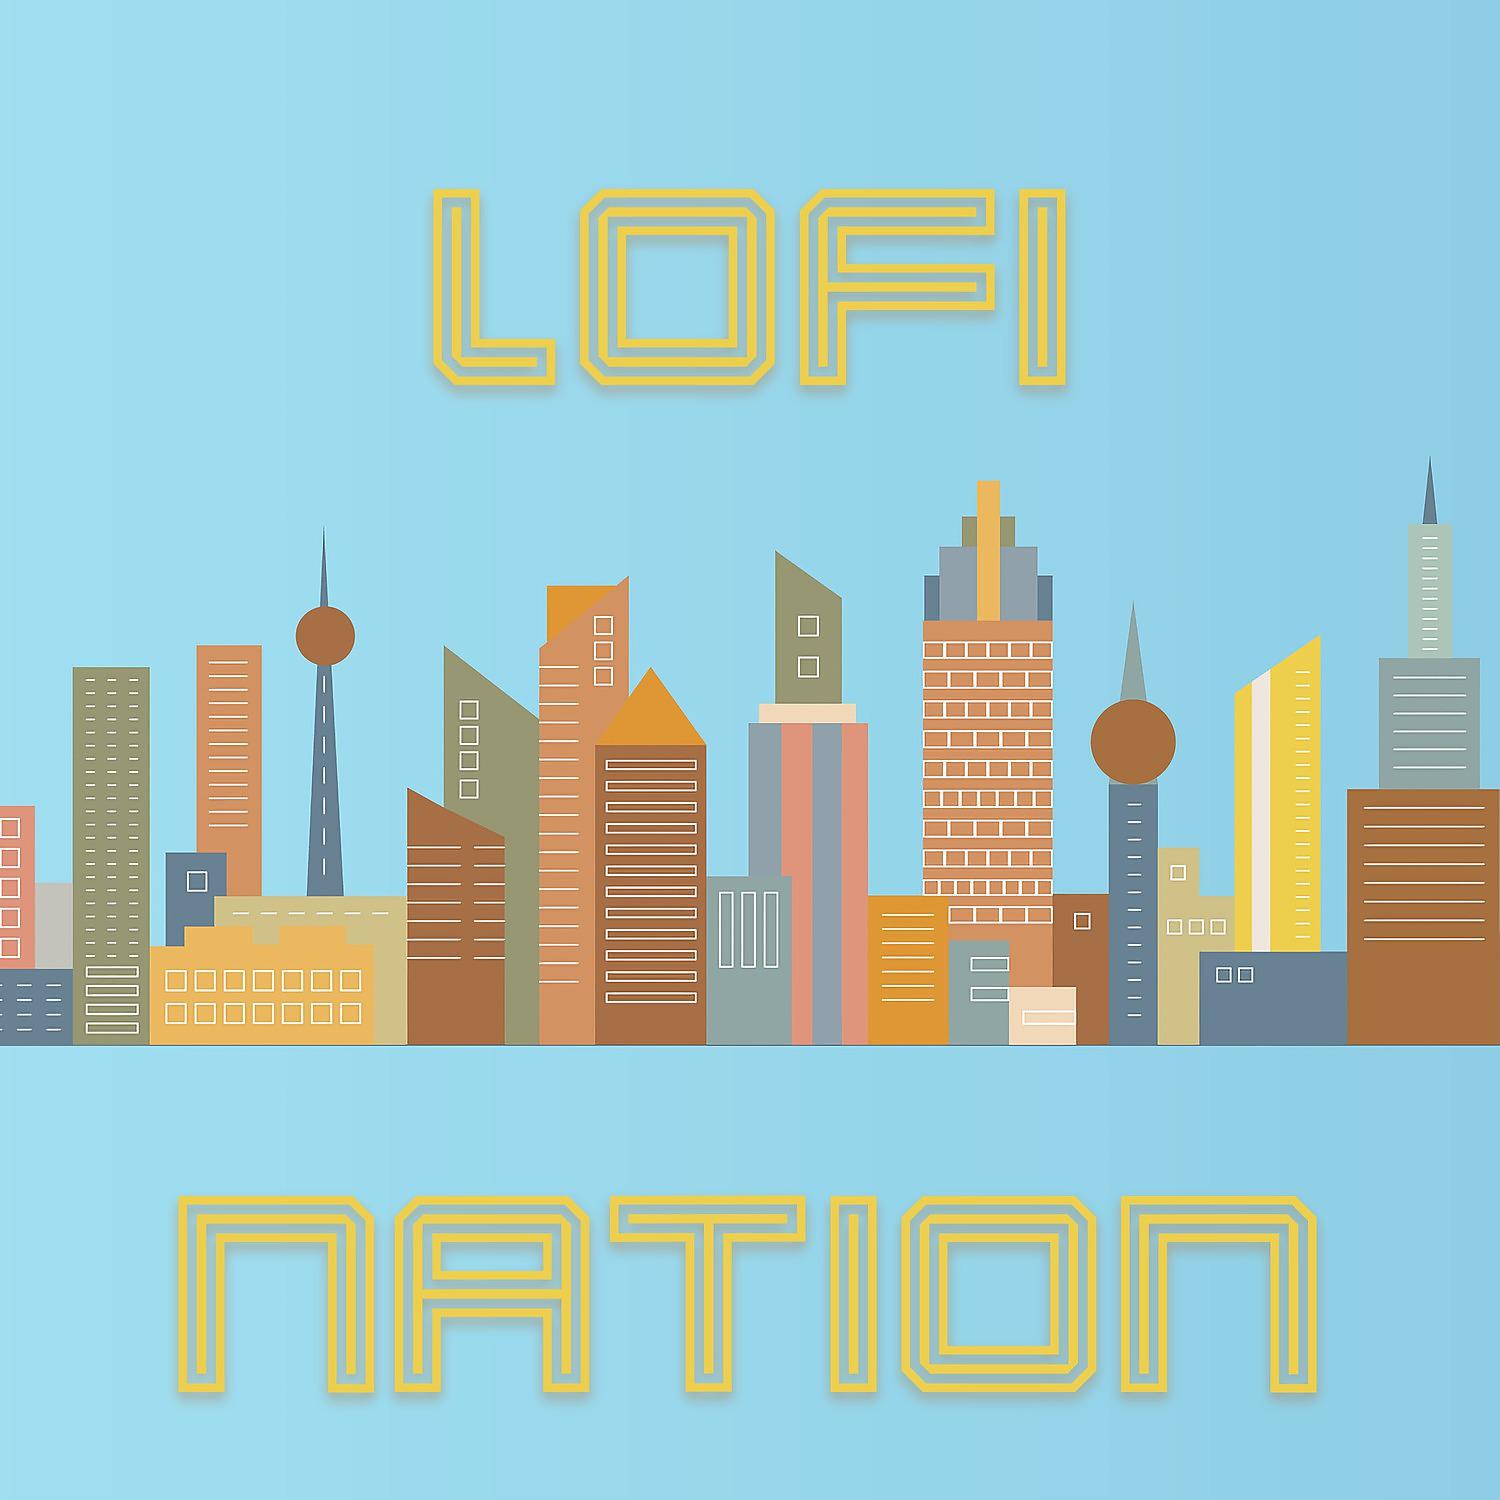 Постер альбома Lofi Nation